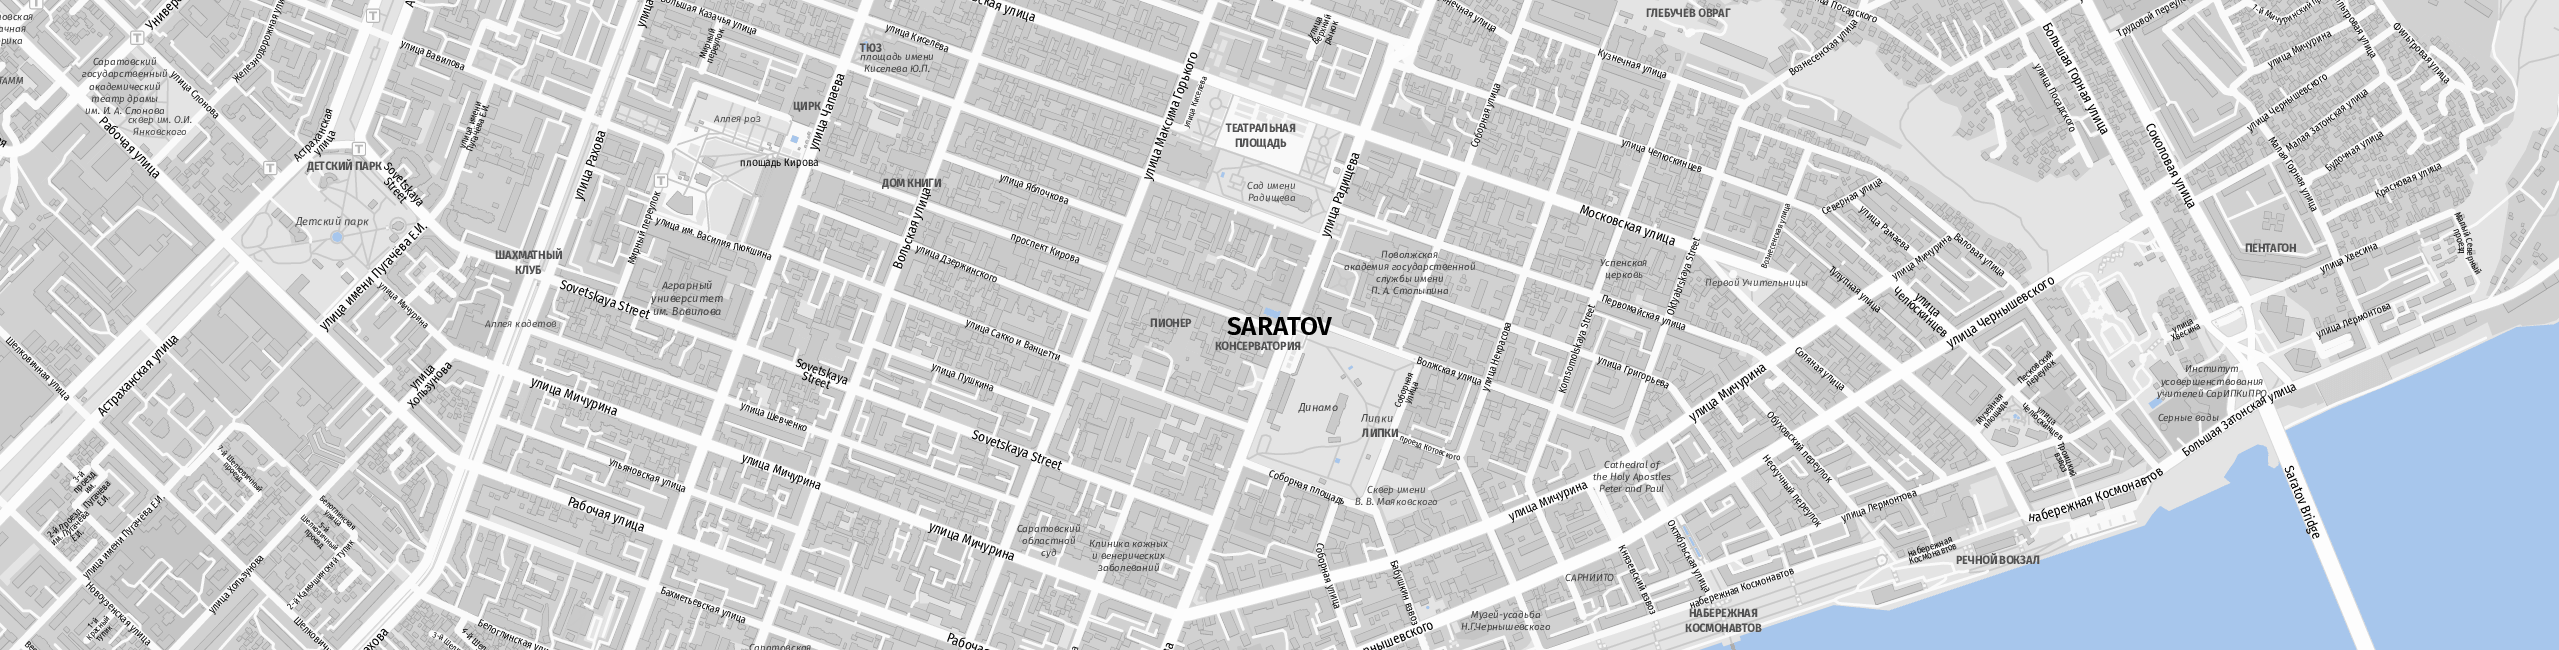 Stadtplan Saratov zum Downloaden.